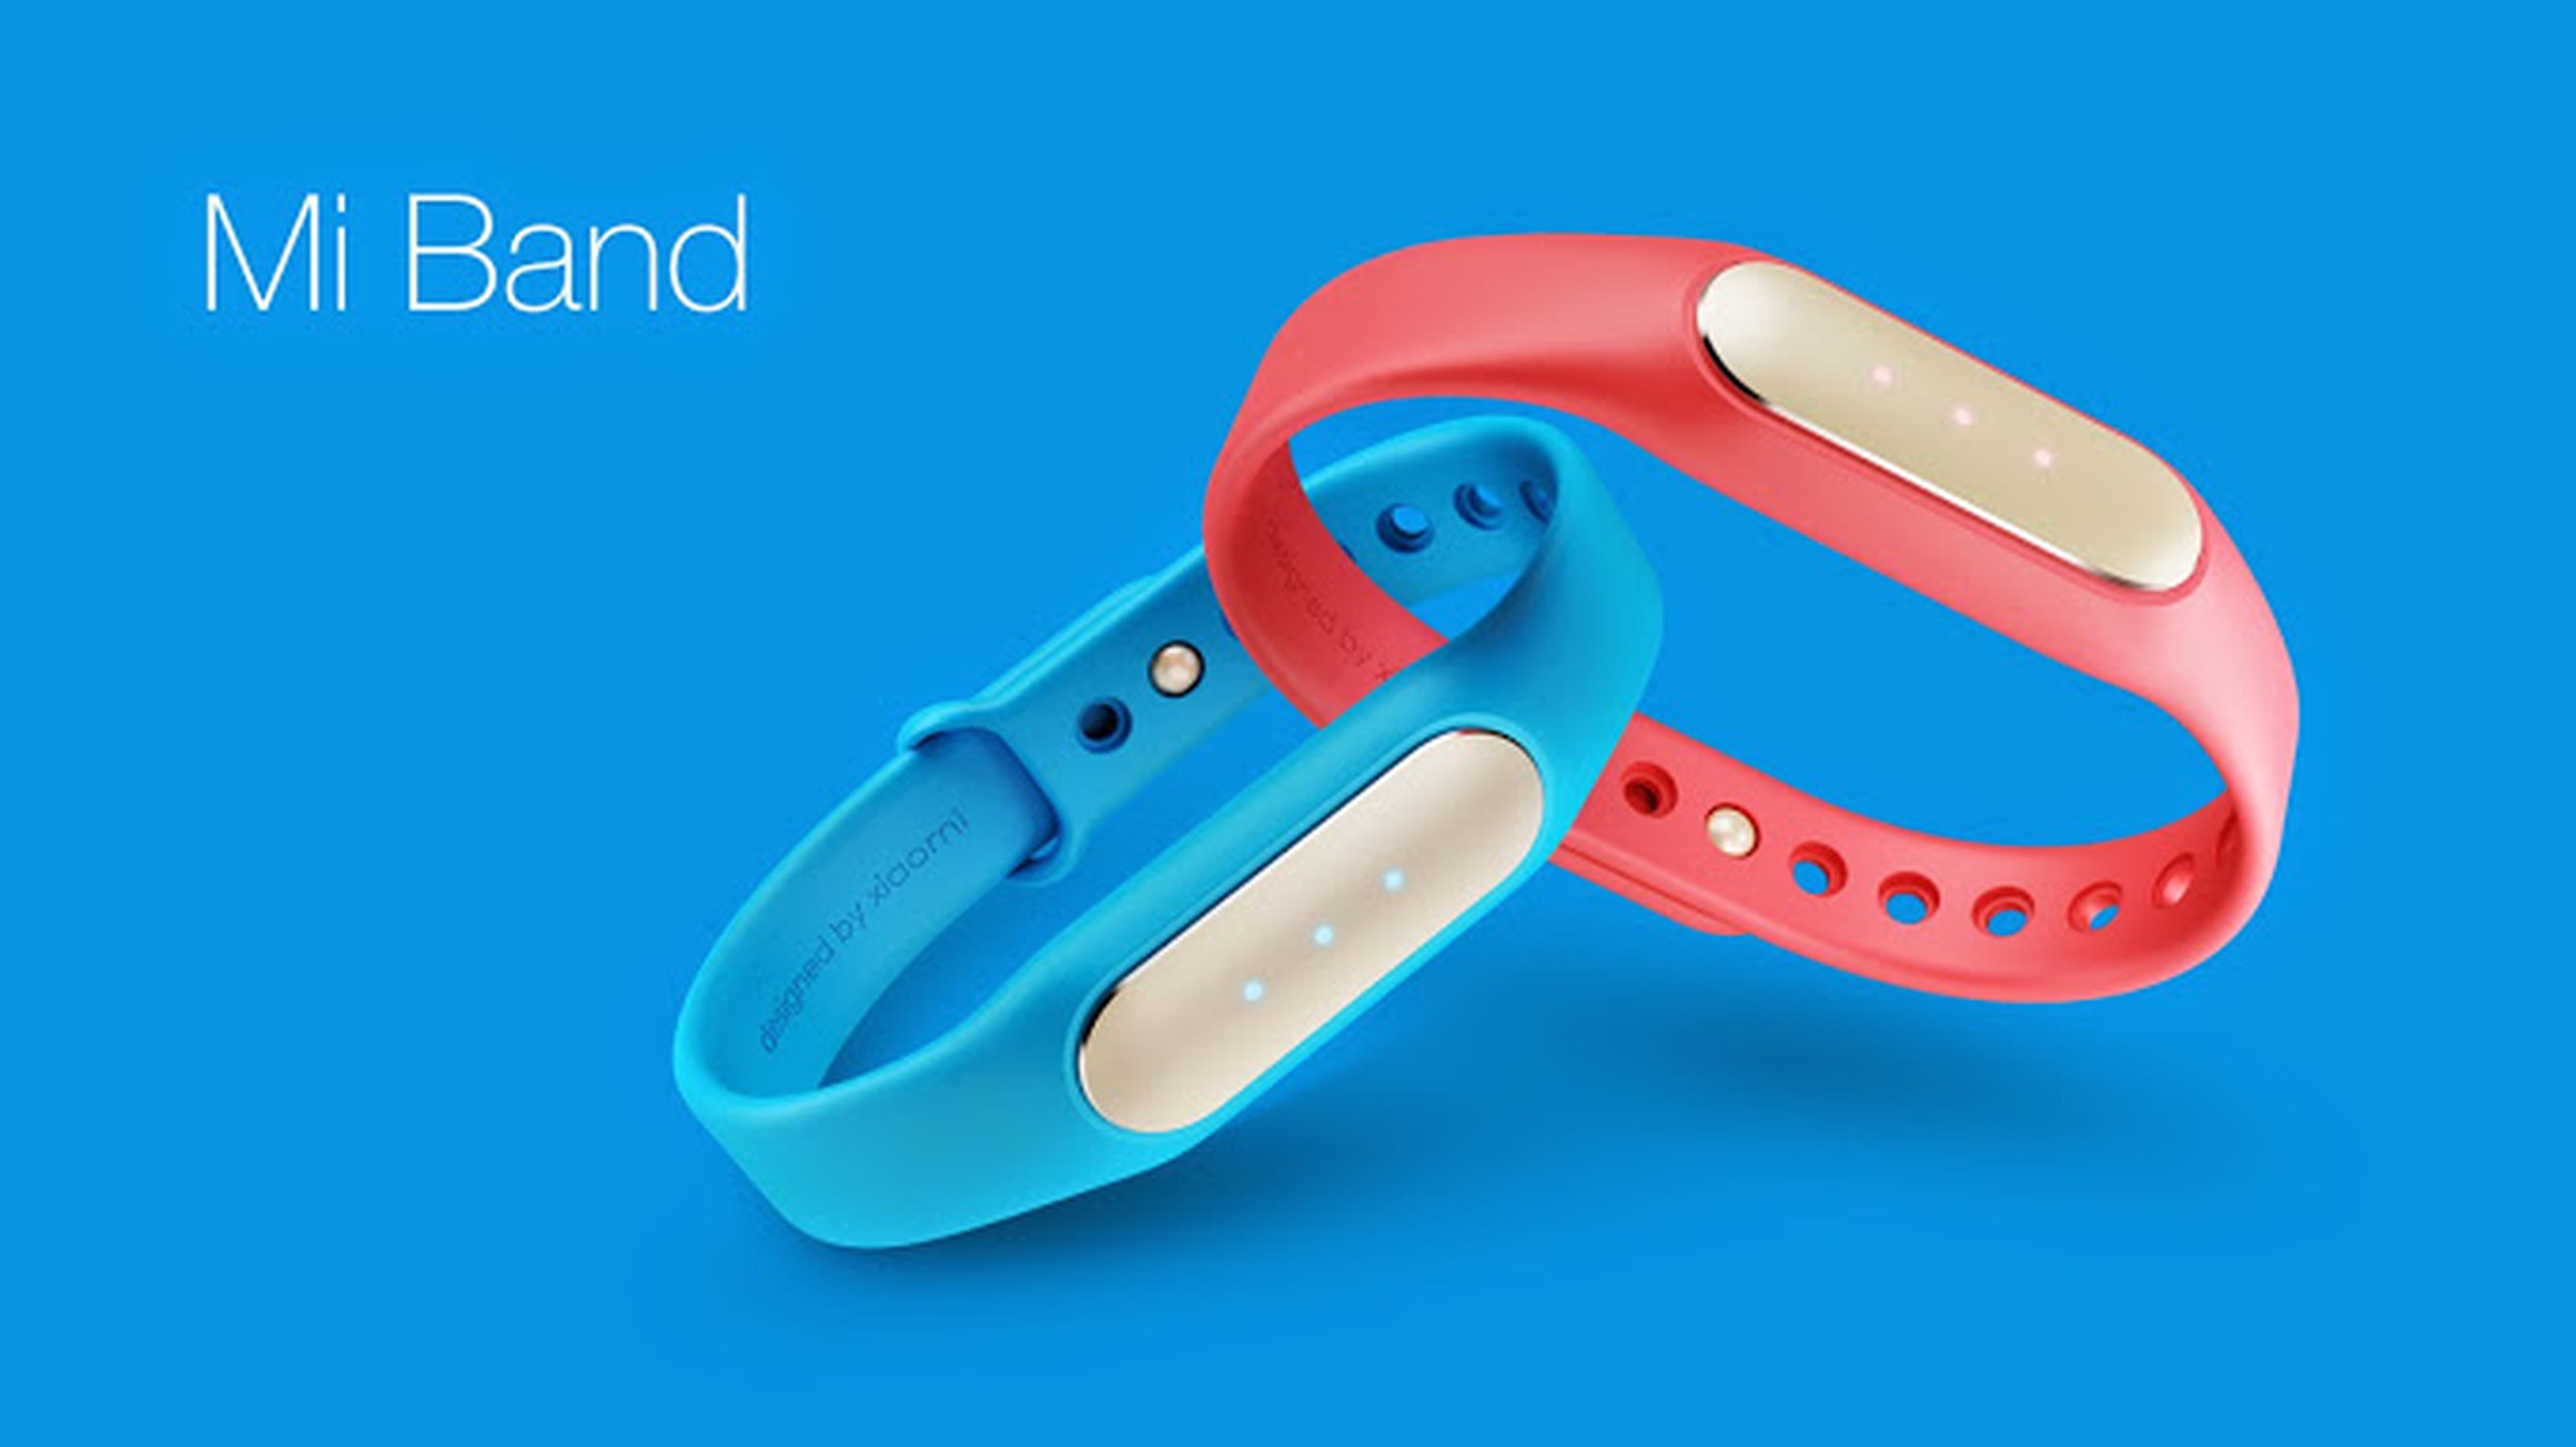 Xiaomi Mi Band pulsera inteligente